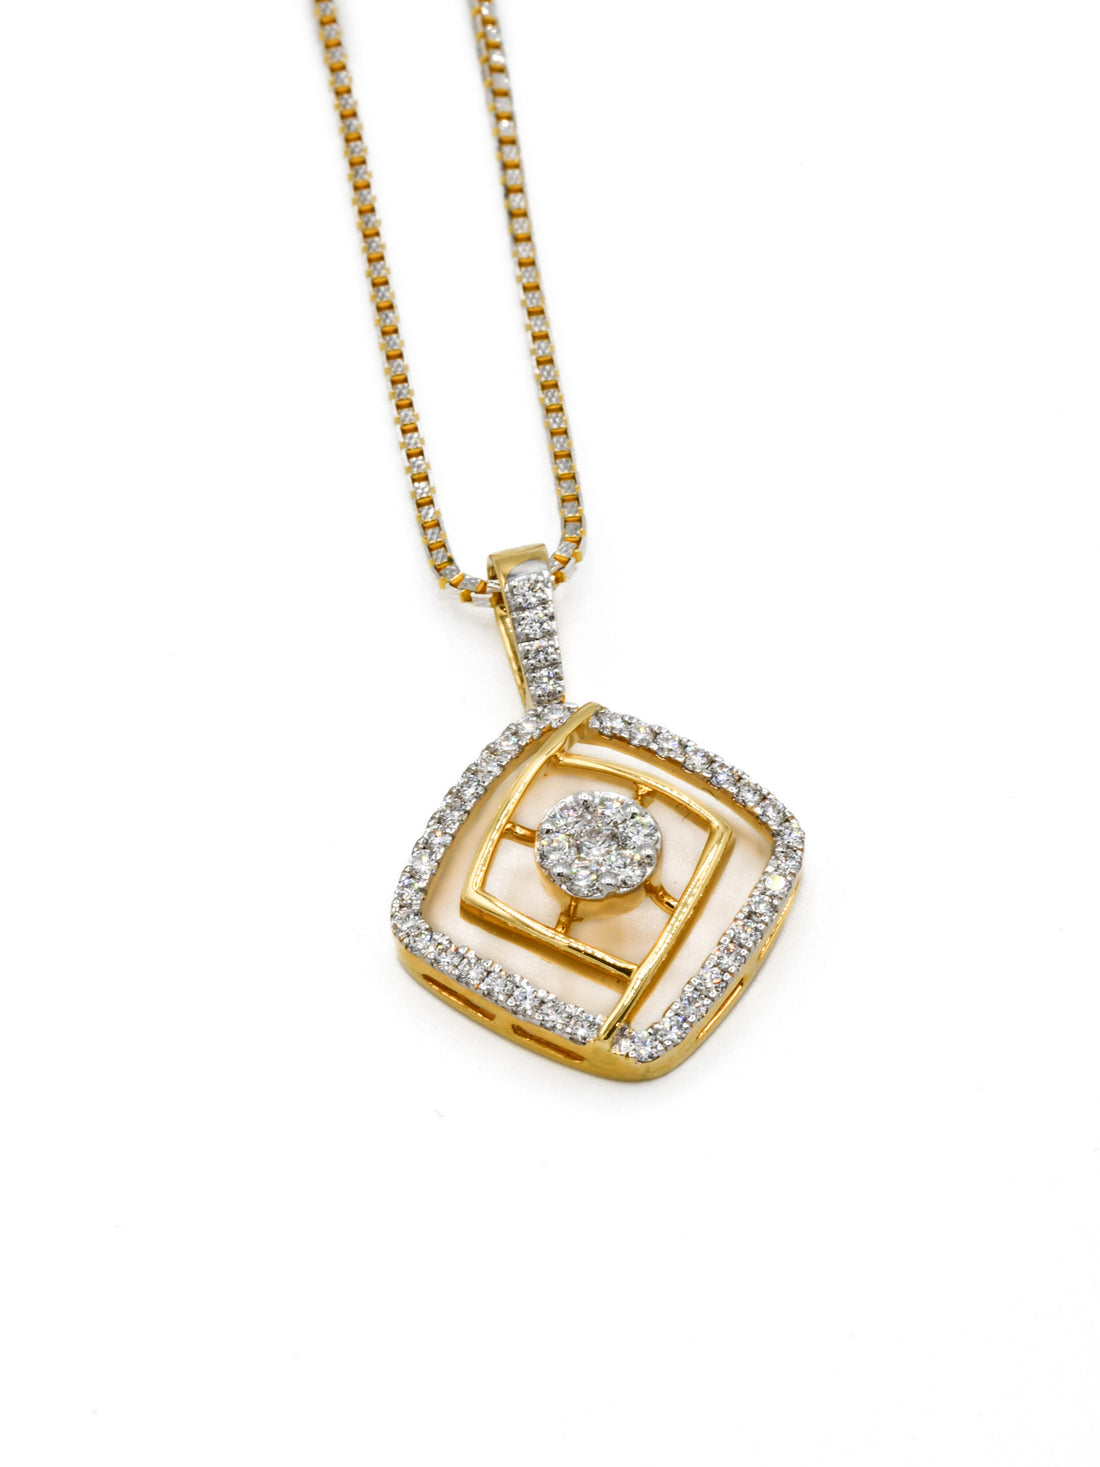 18ct Gold Diamond Pendant - 0.54 cts - Roop Darshan